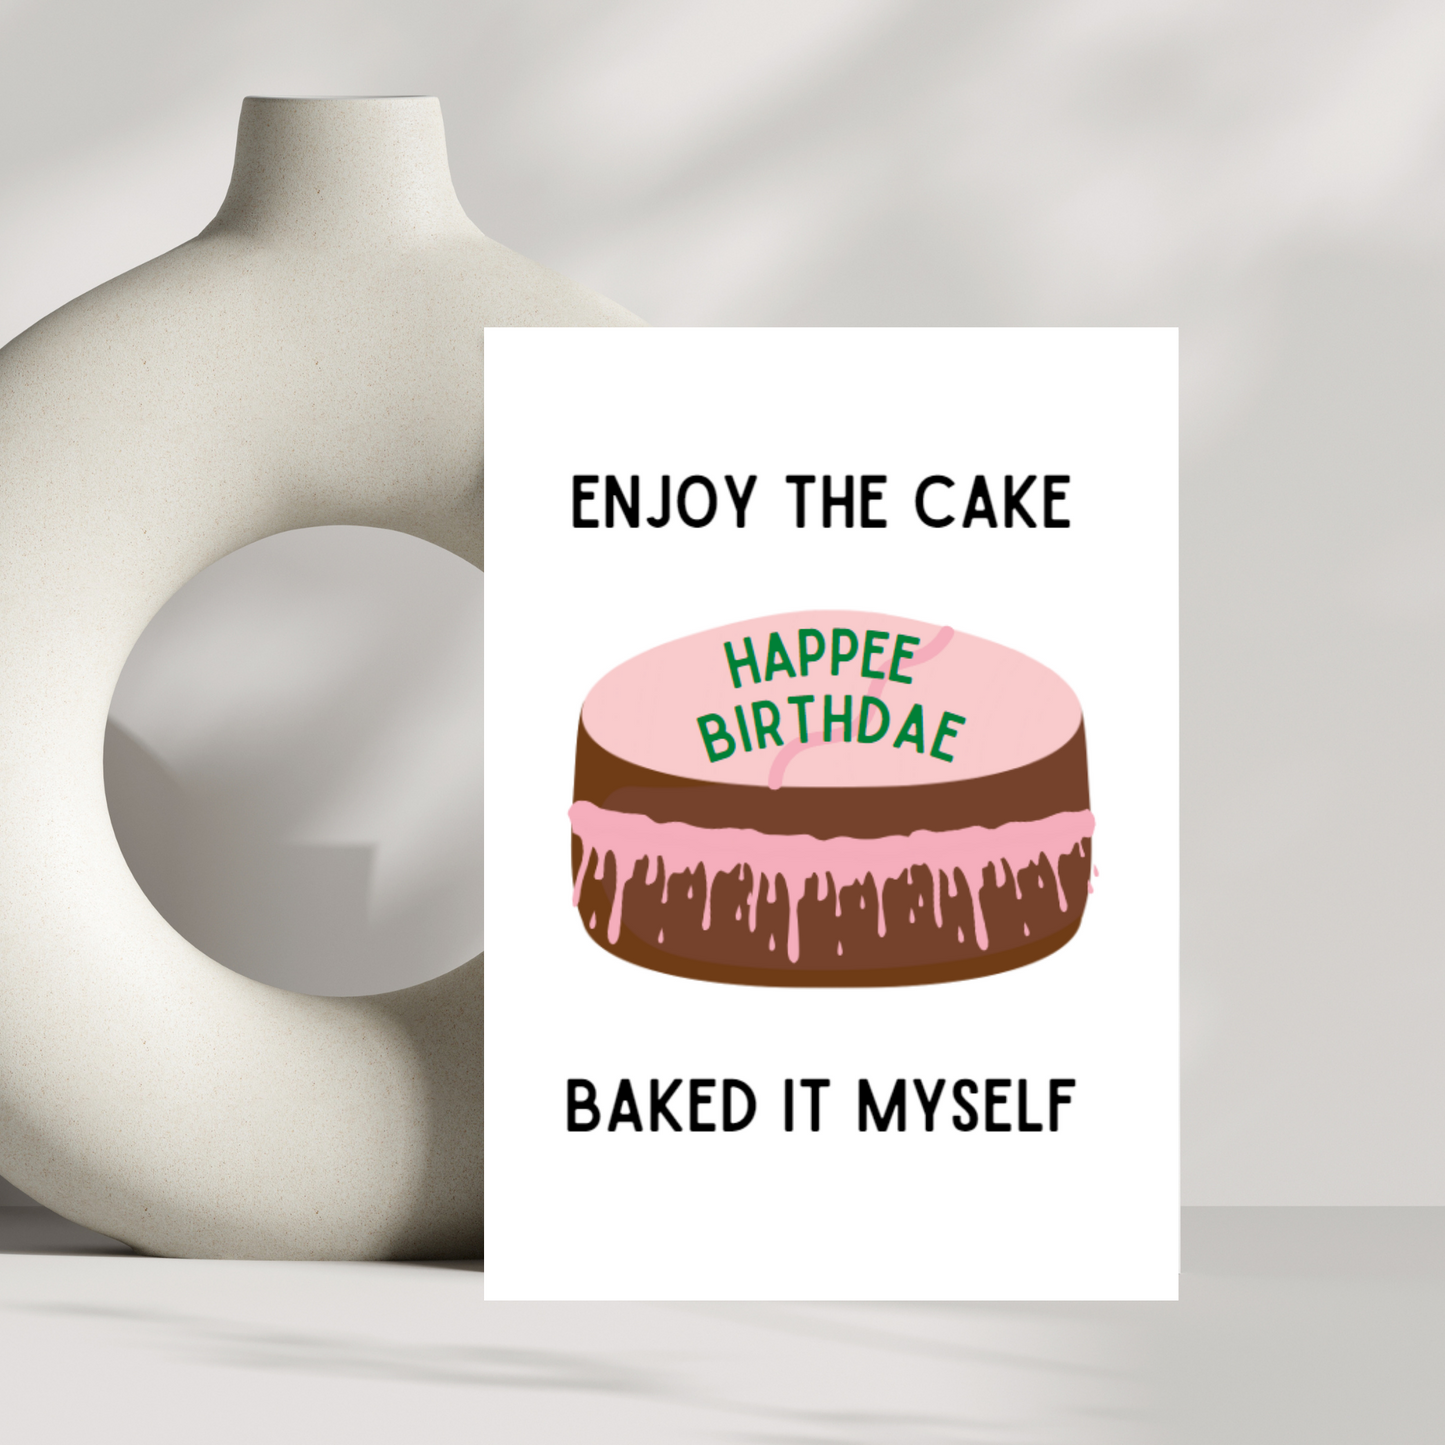 Enjoy the cake, baked it myself. Happee Birthdae card